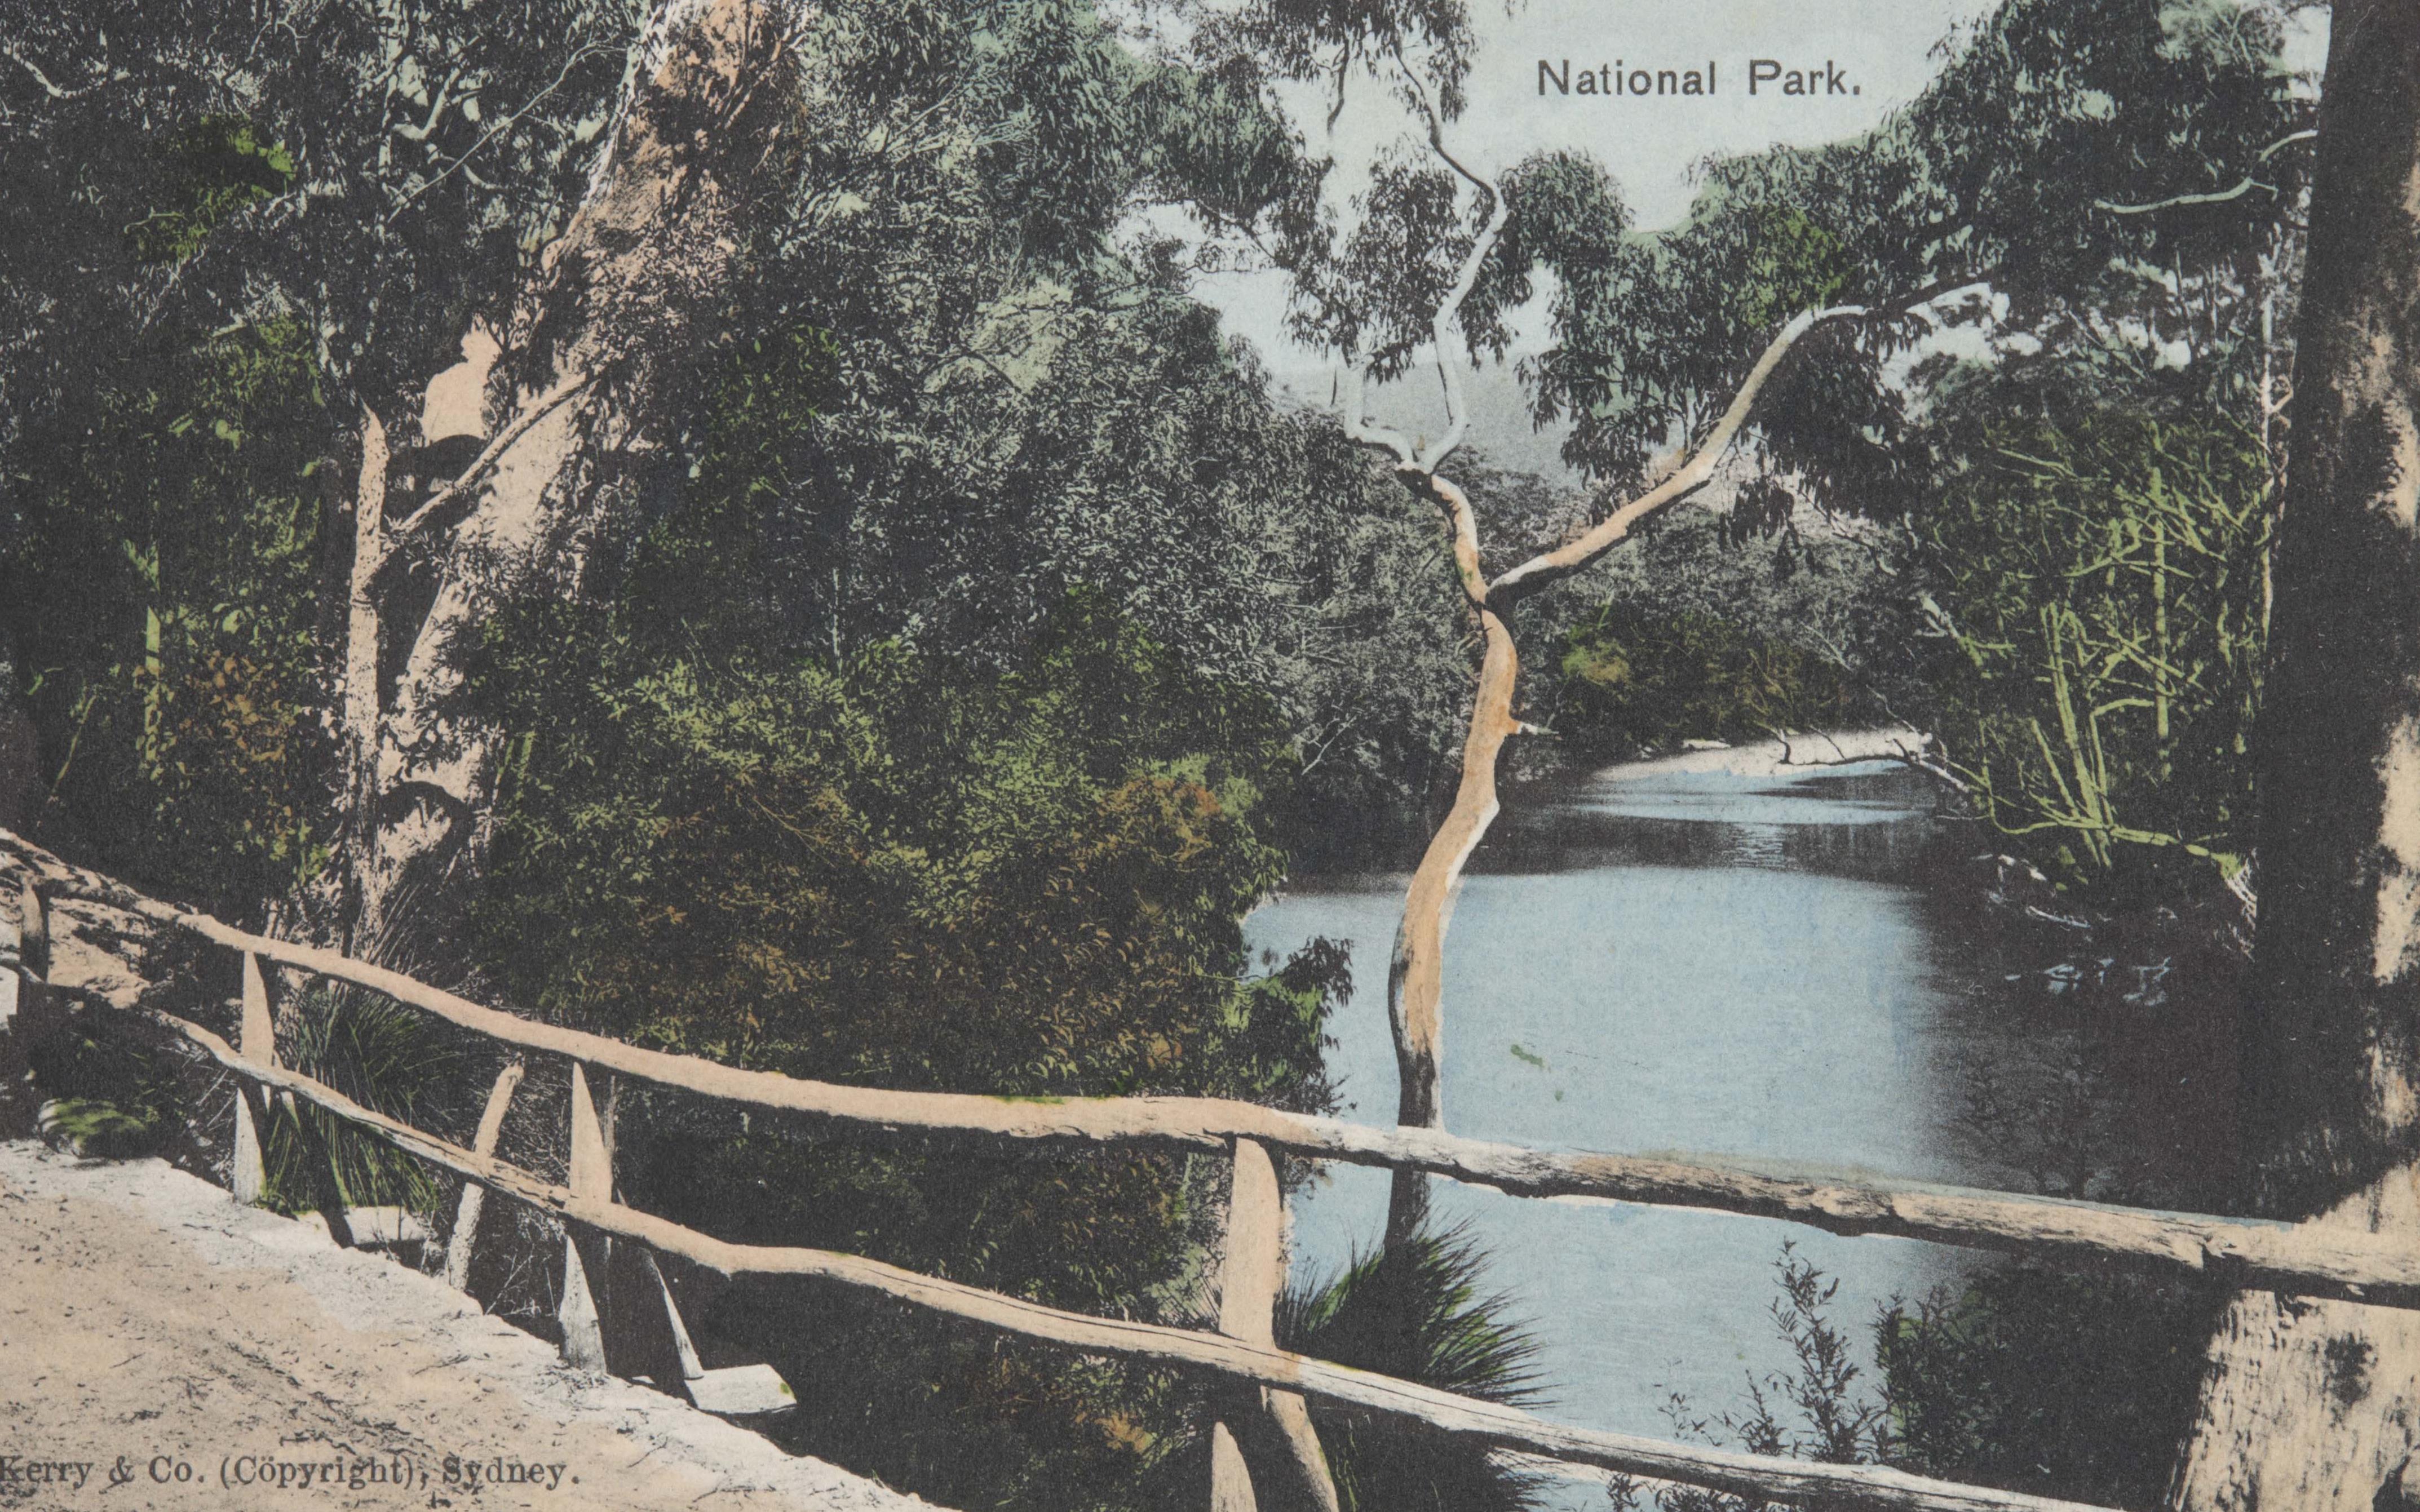 Postcard featuring National Park, Sydney.